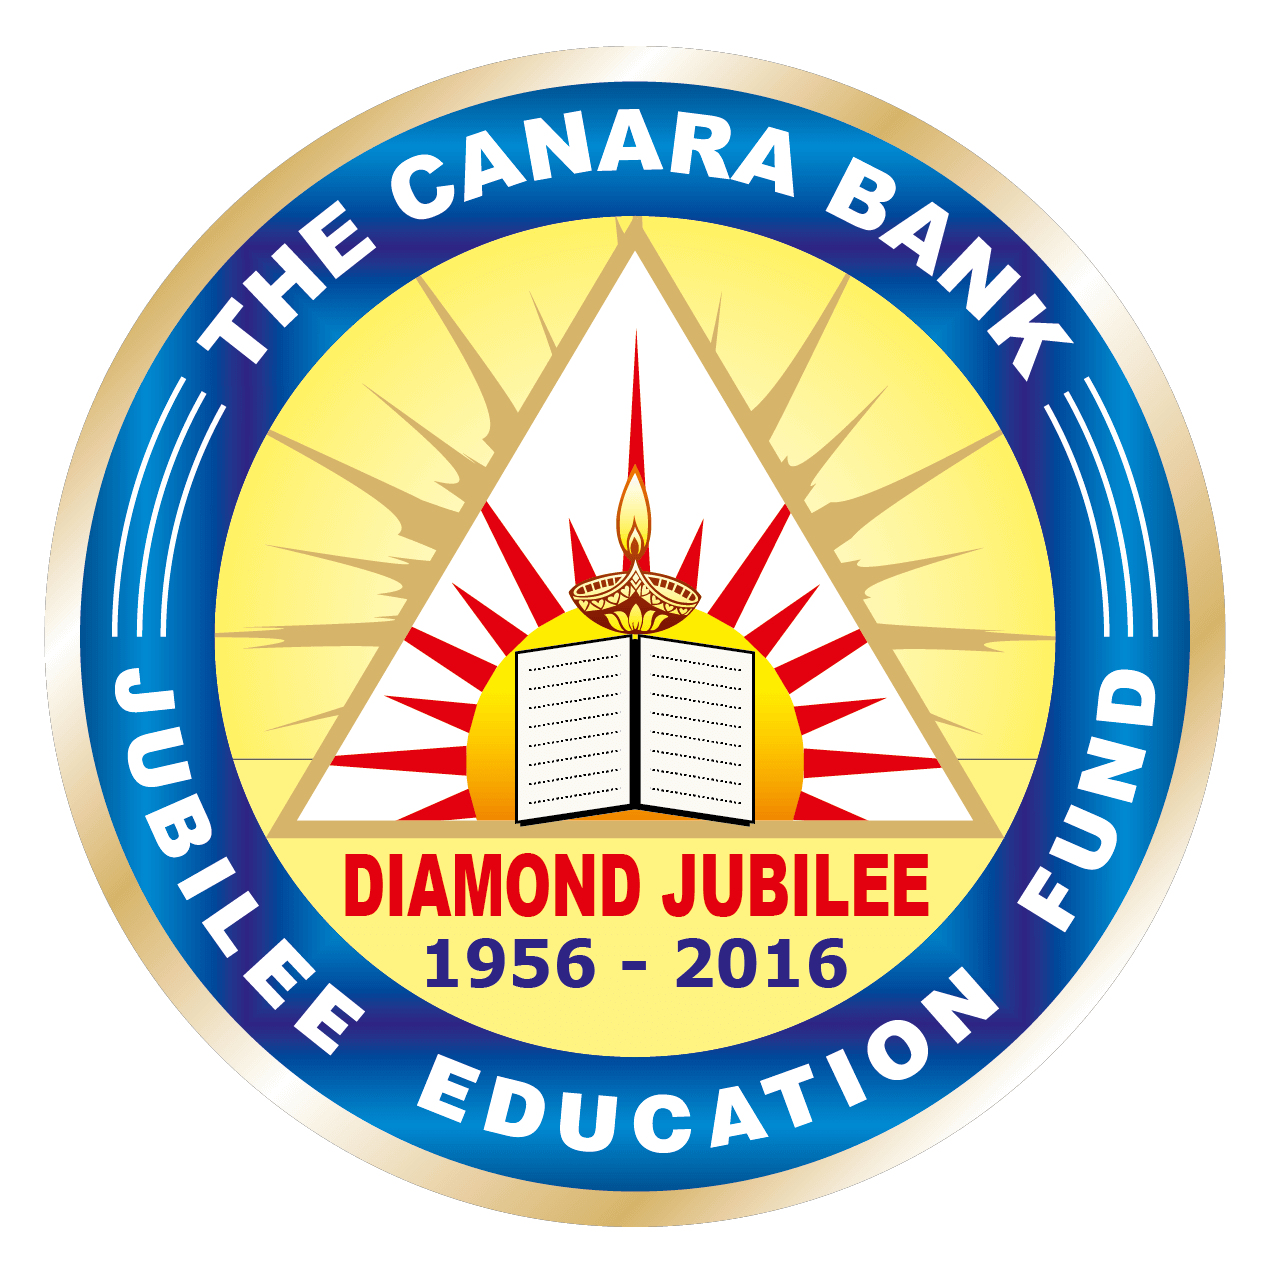 Canara Bank Jubilee Education Fund